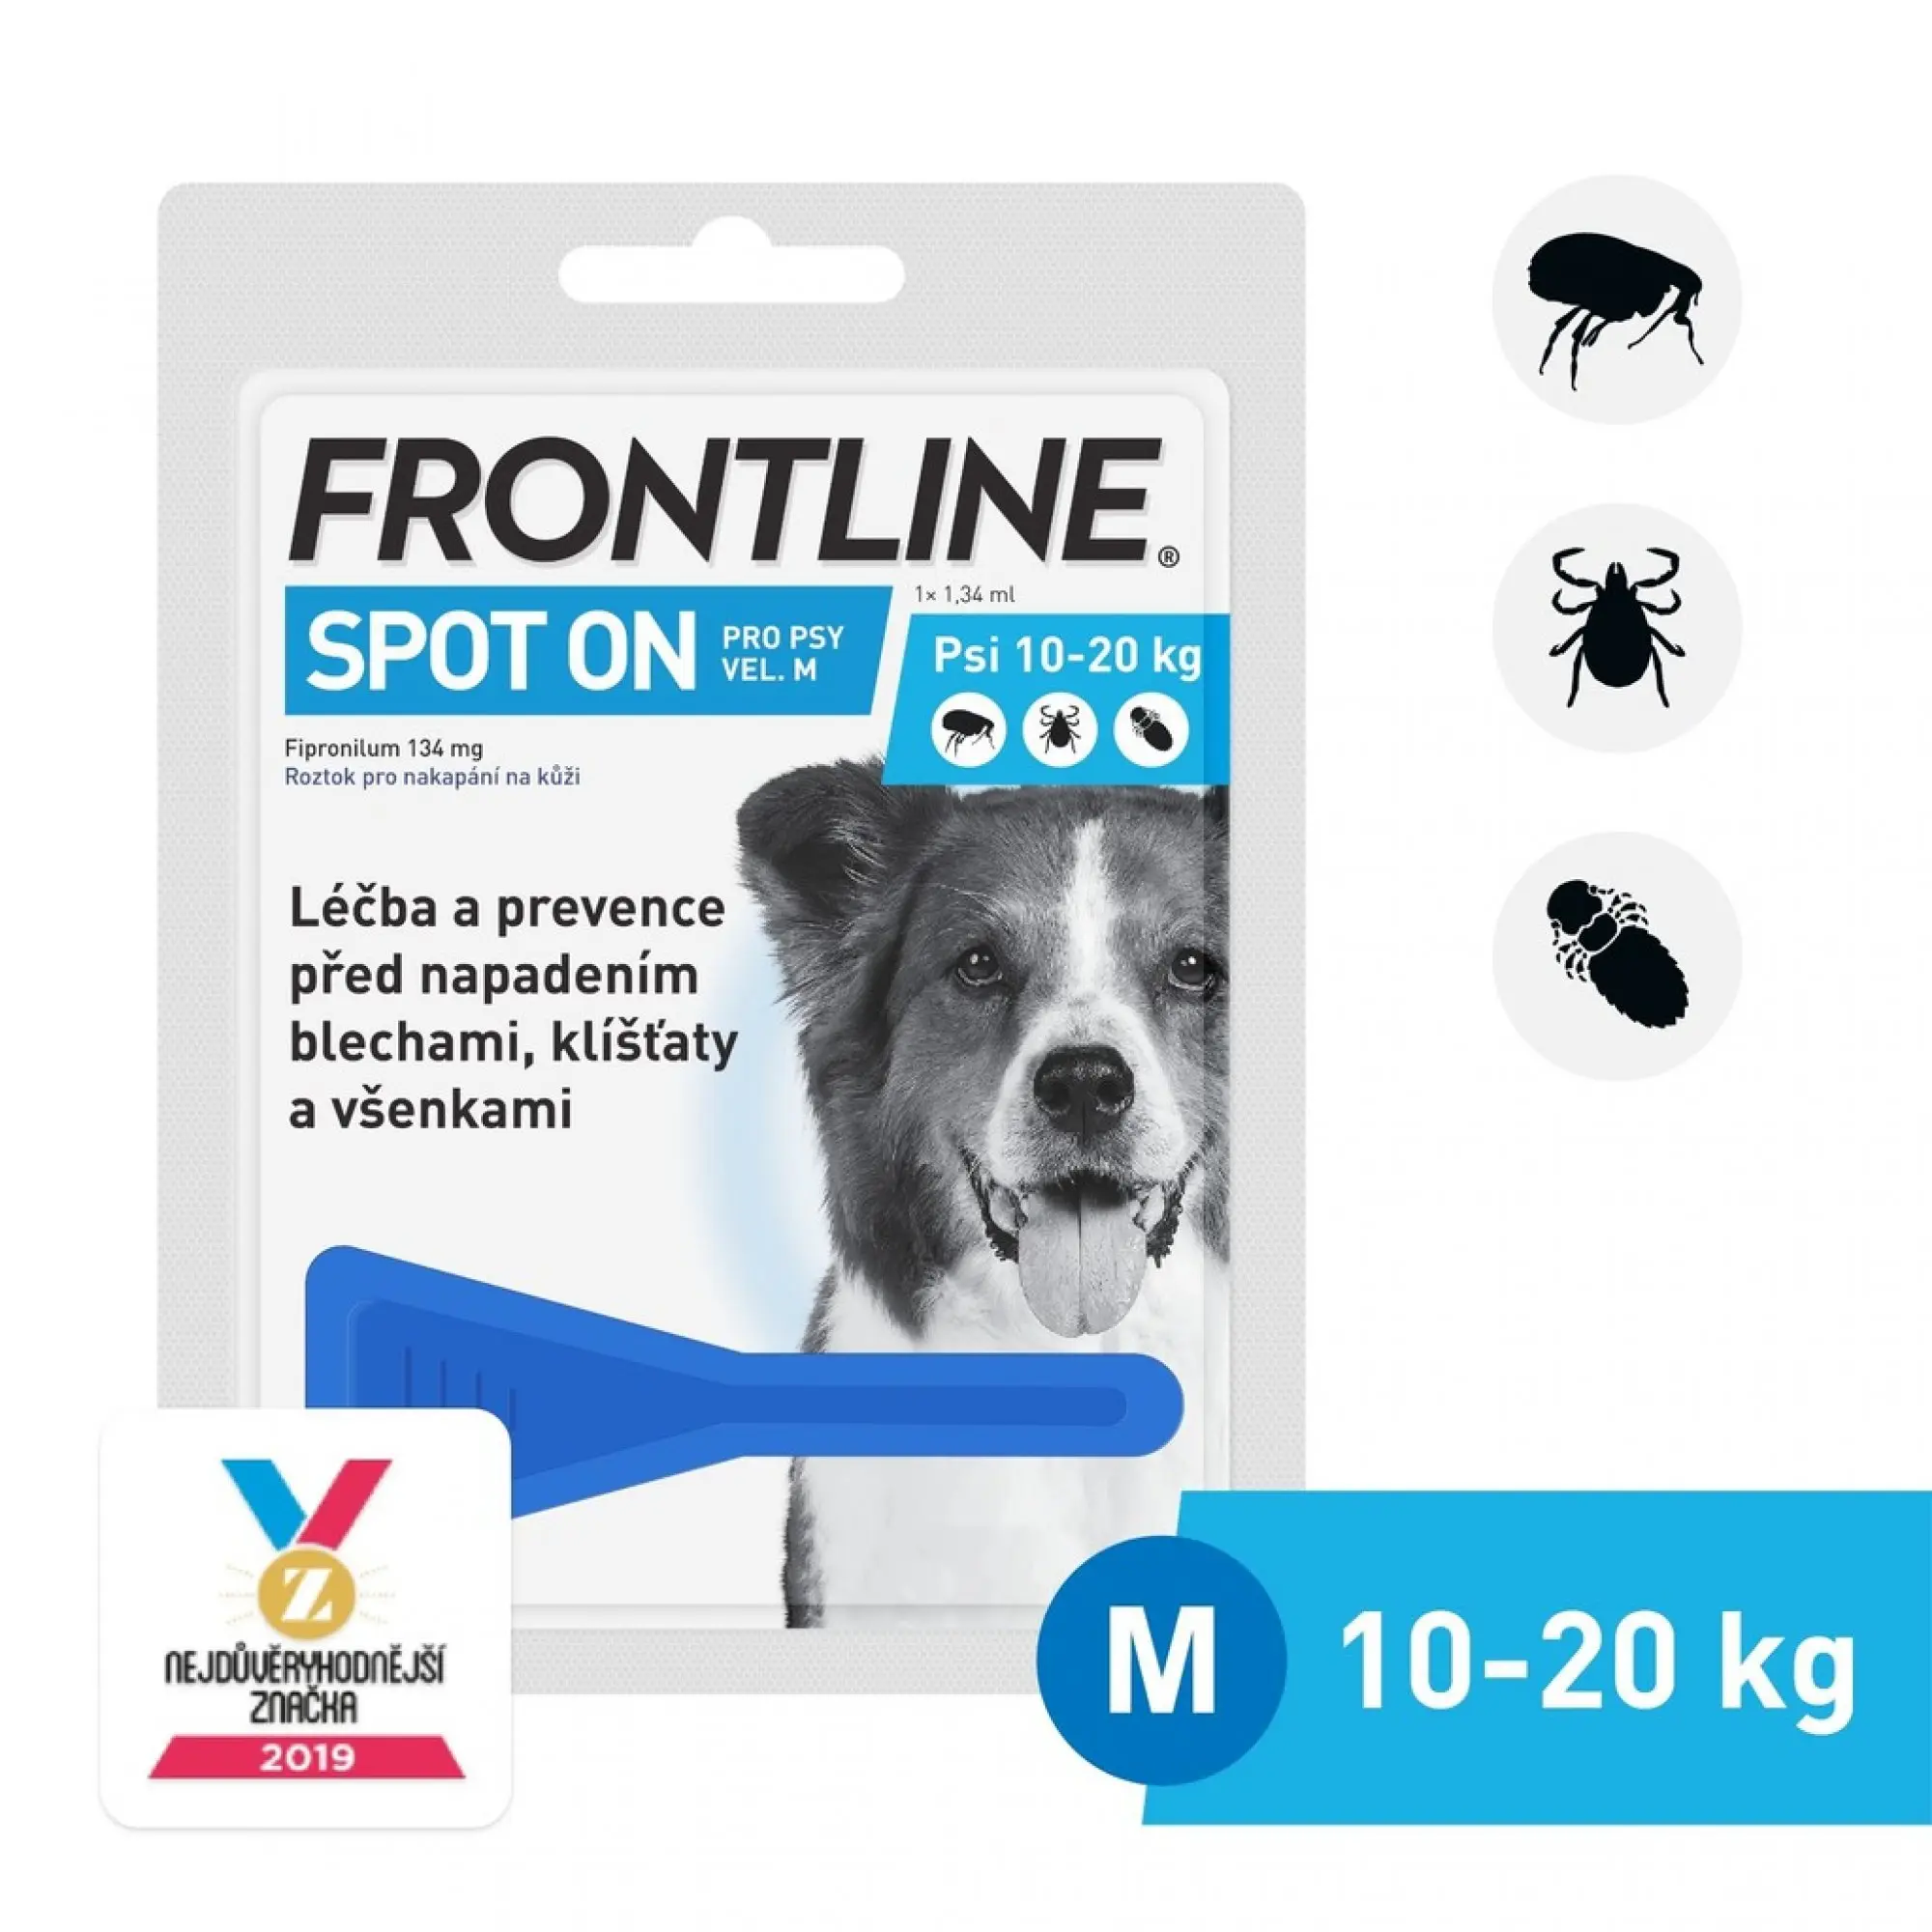 Frontline Spot-on pro psy M 10-20 kg 1,34 ml